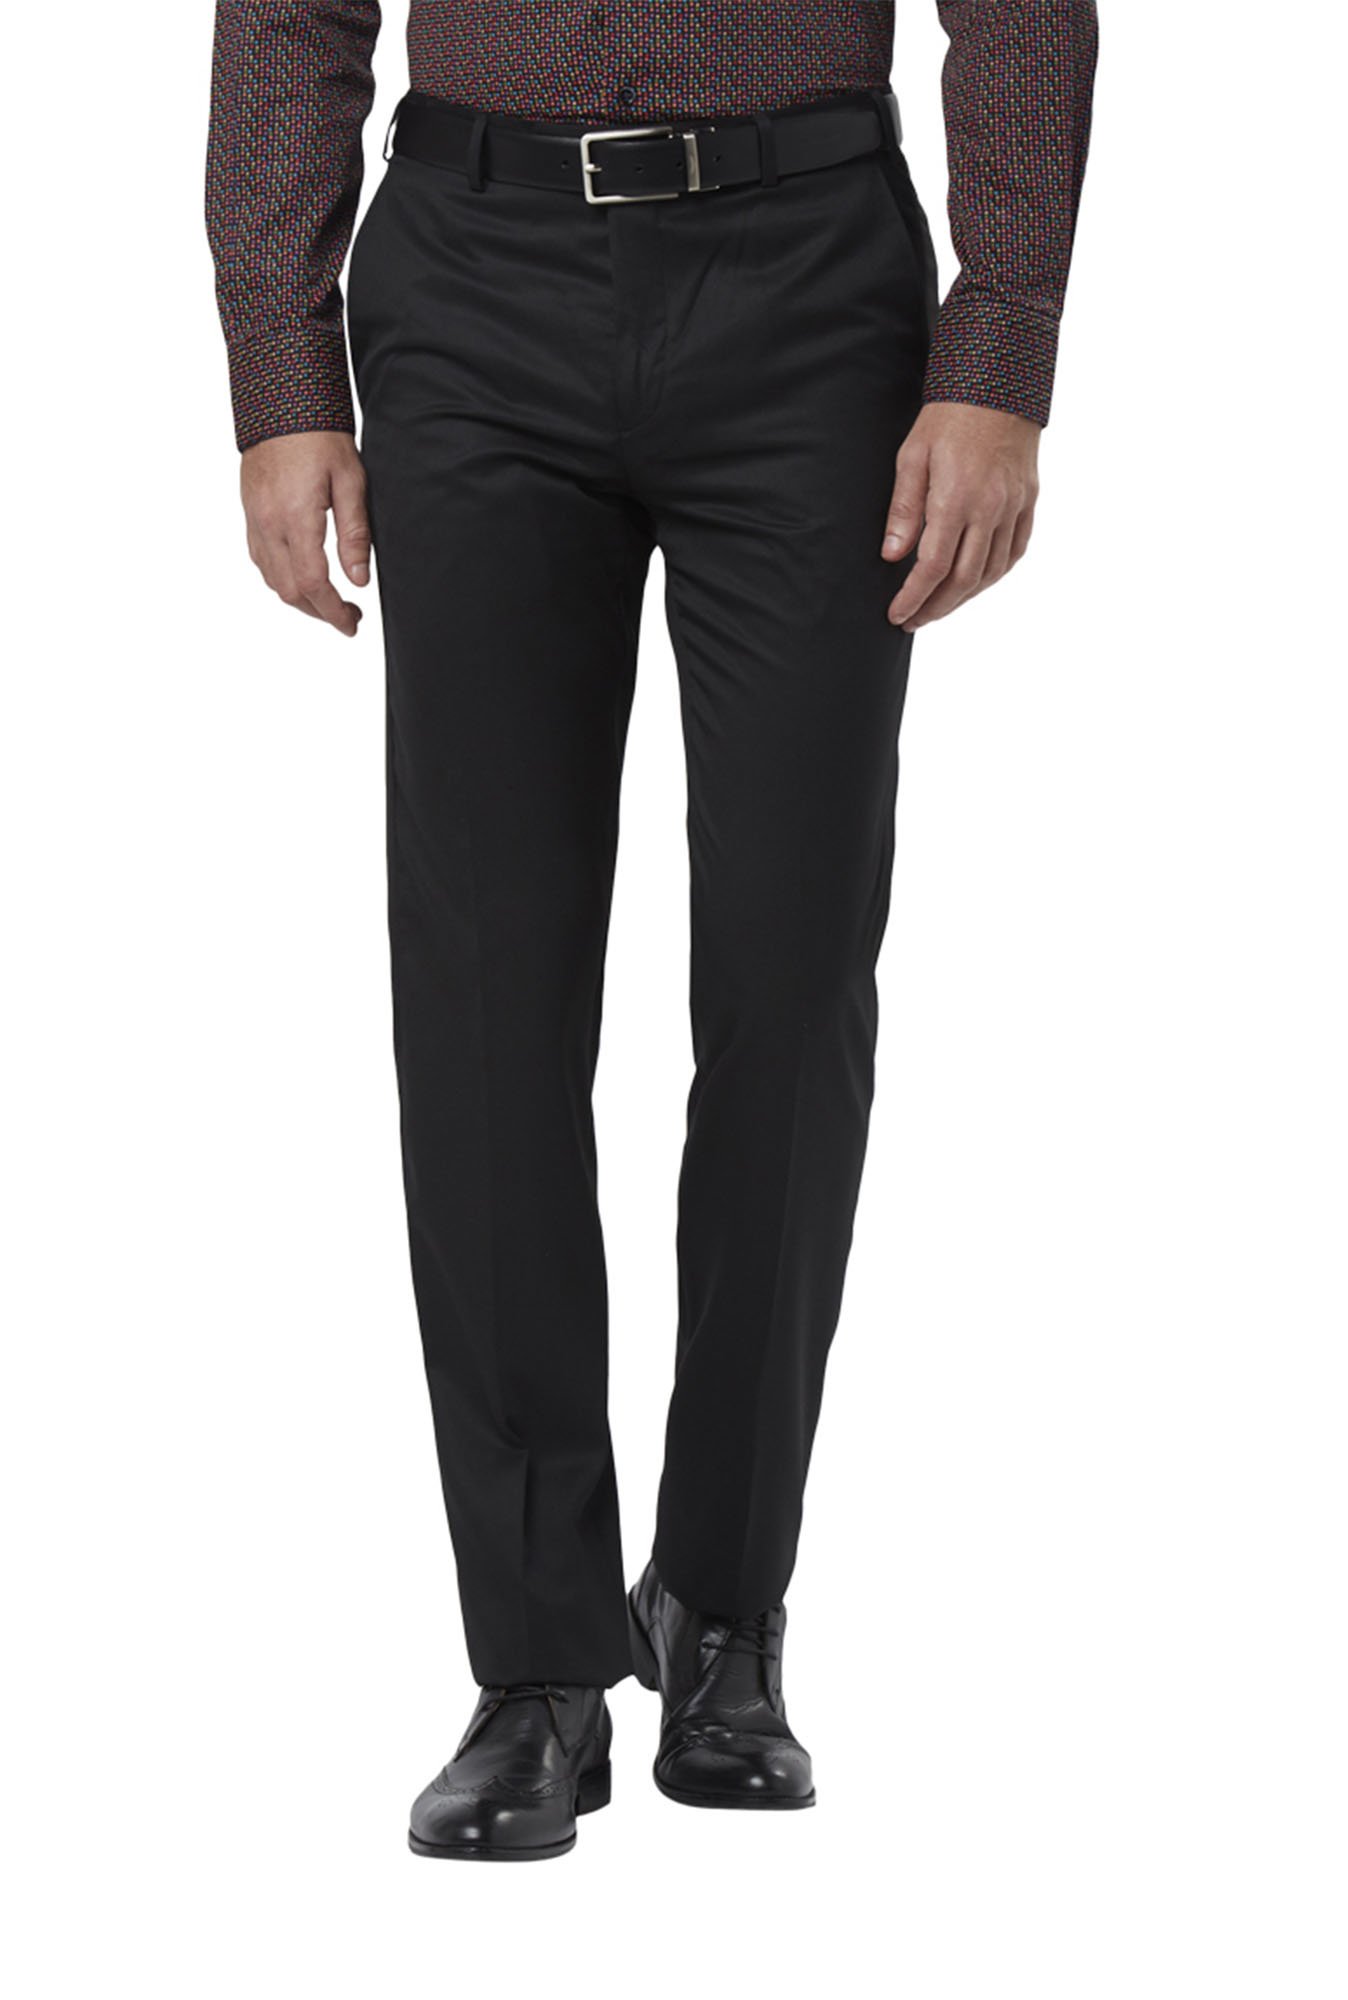 Buy Raymond Black Trouser Size 30RMTS02975K6 at Amazonin